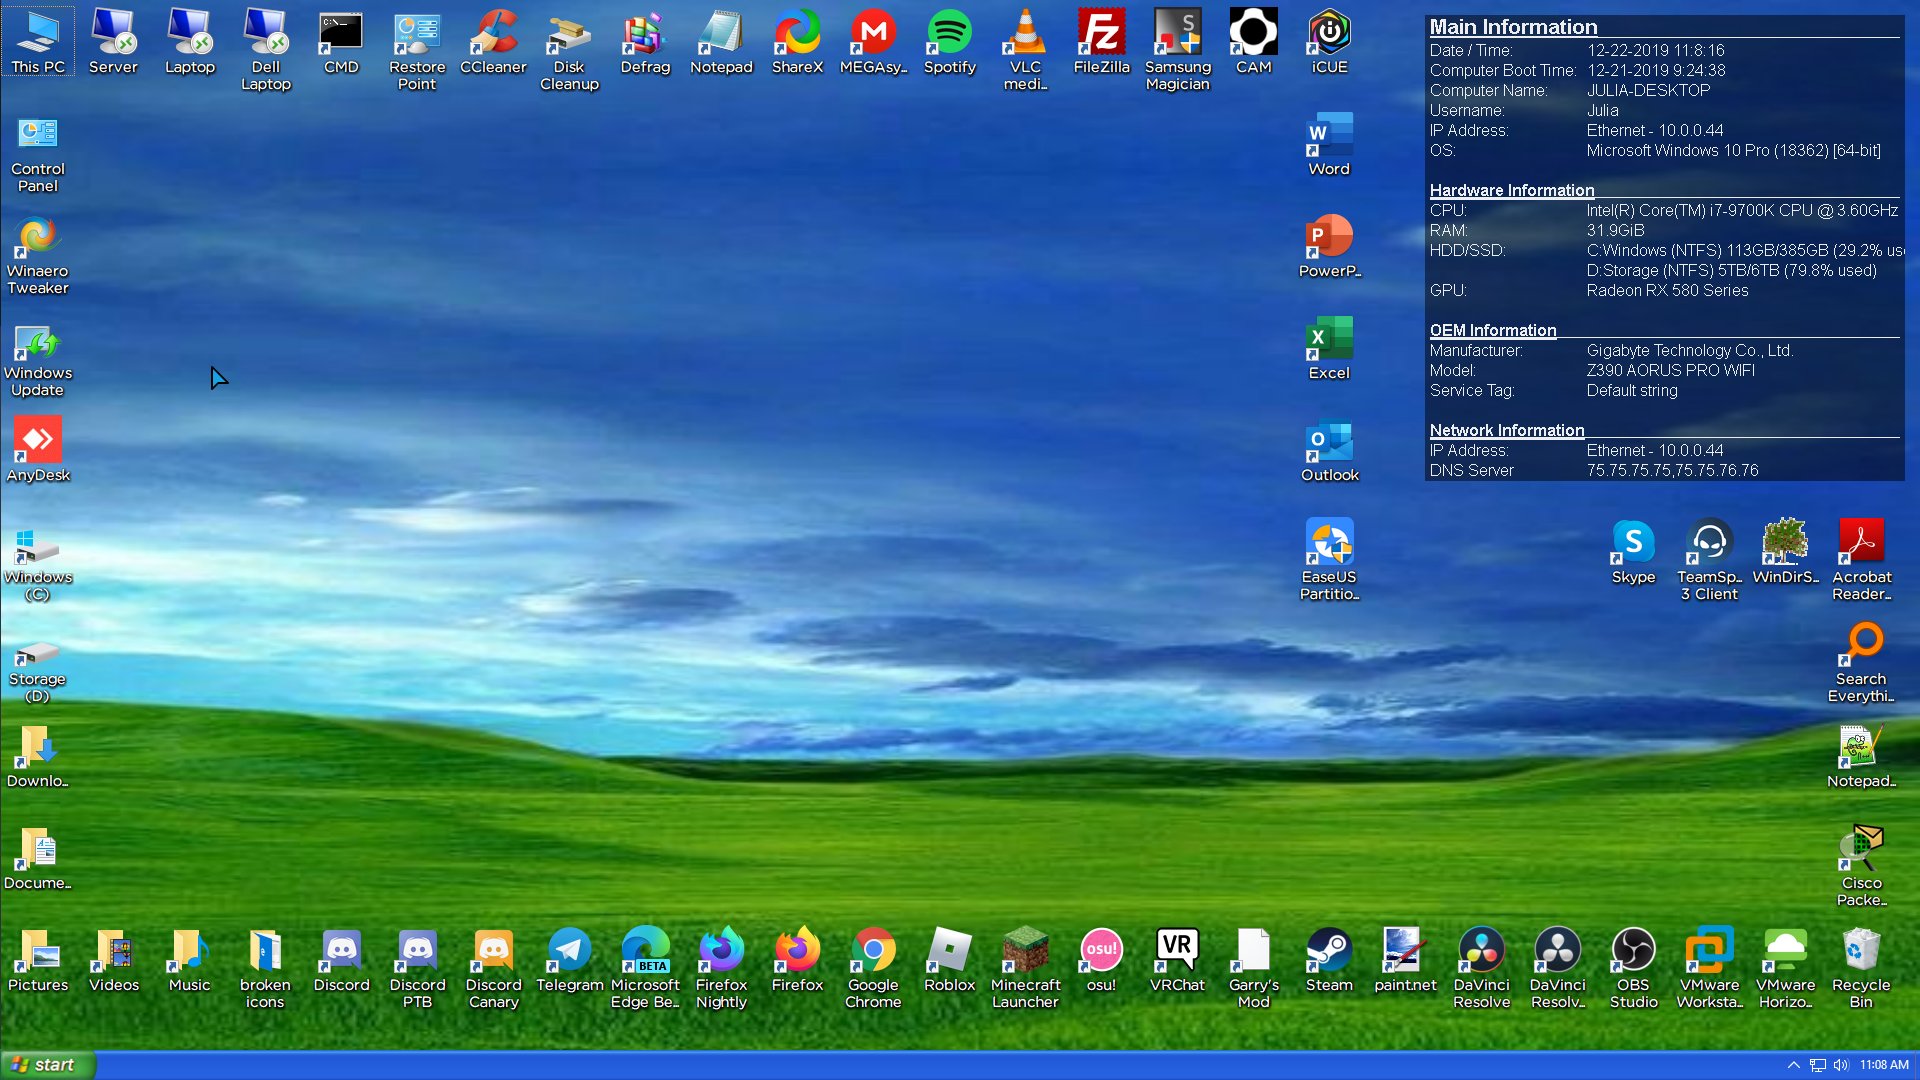 The Windows XP wallpaper is now a vineyard : r/mildlyinteresting